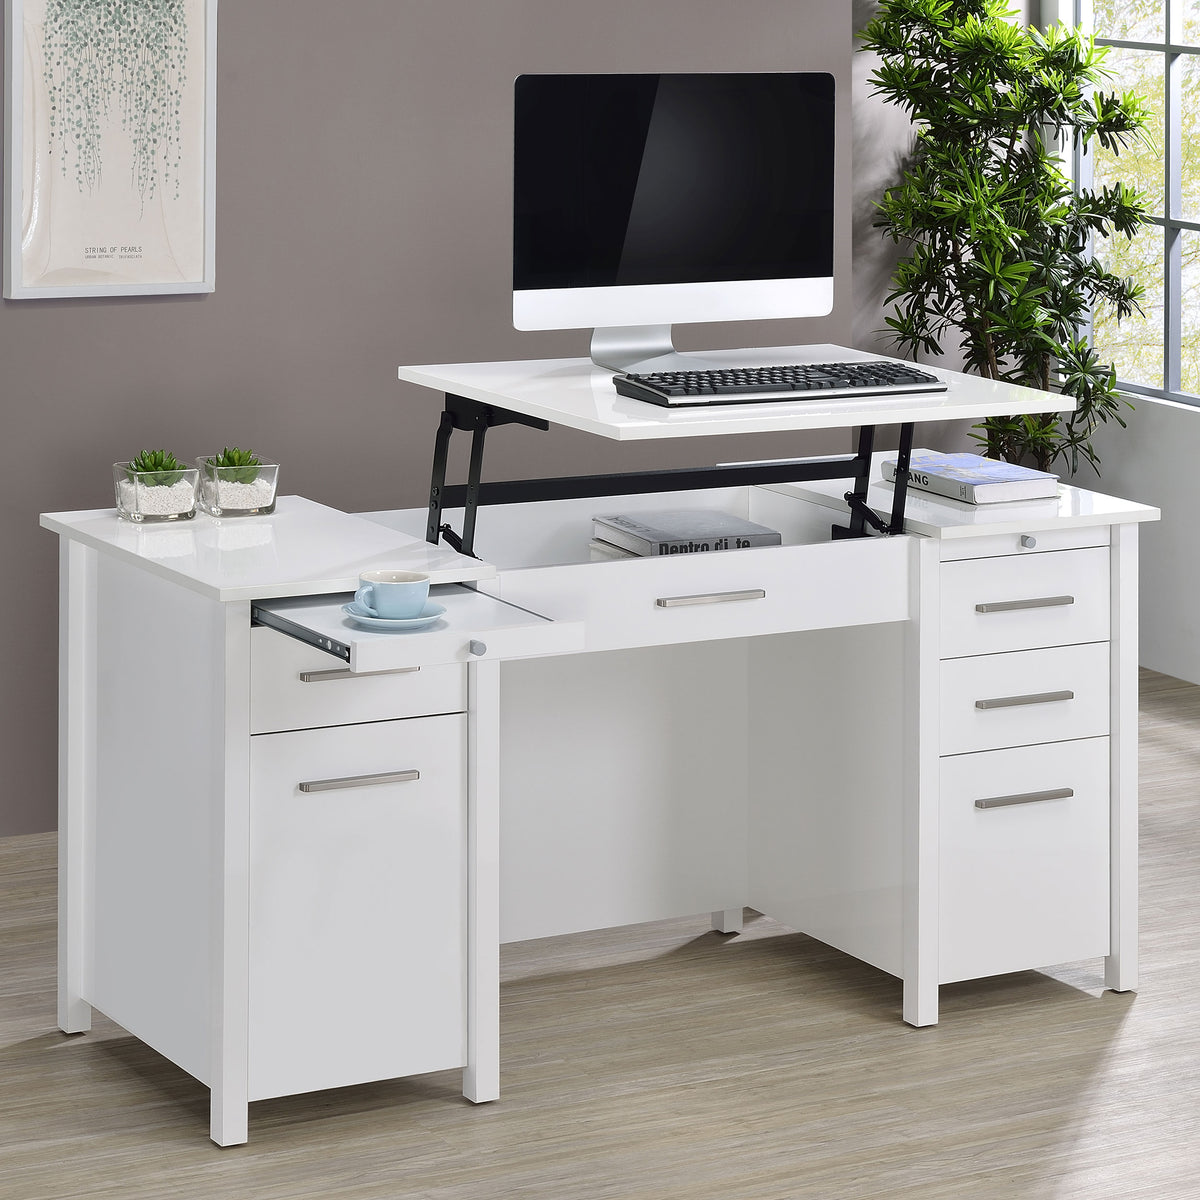 Dylan 4-drawer Lift Top Office Desk  Las Vegas Furniture Stores